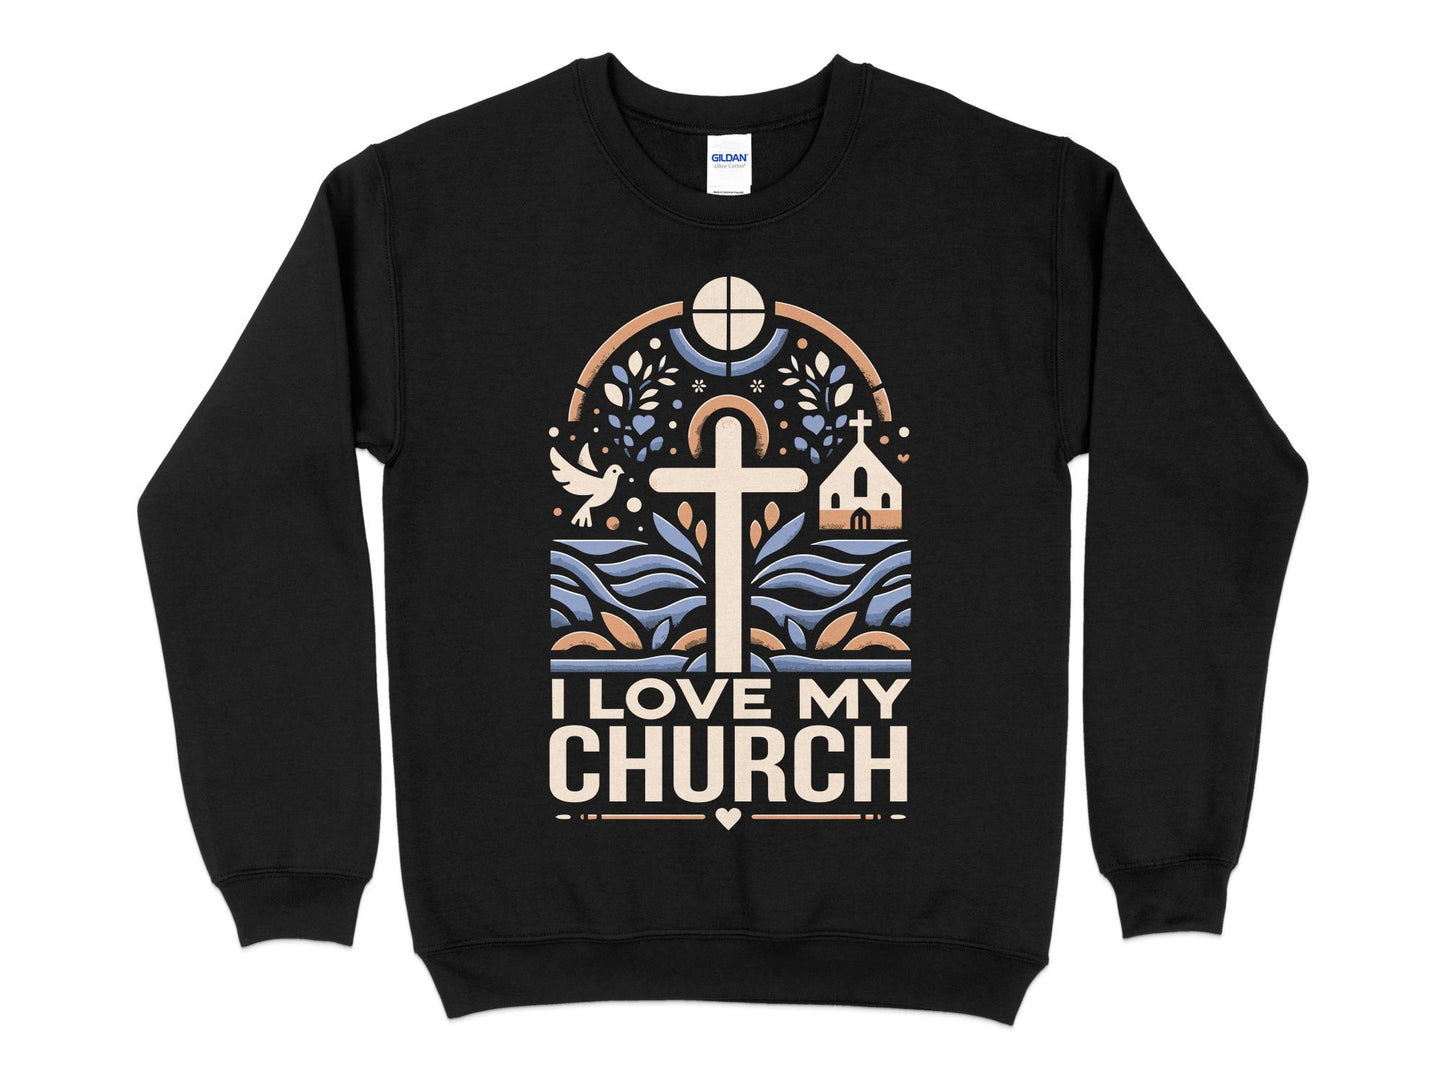 I Love My Church Sweatshirt, black